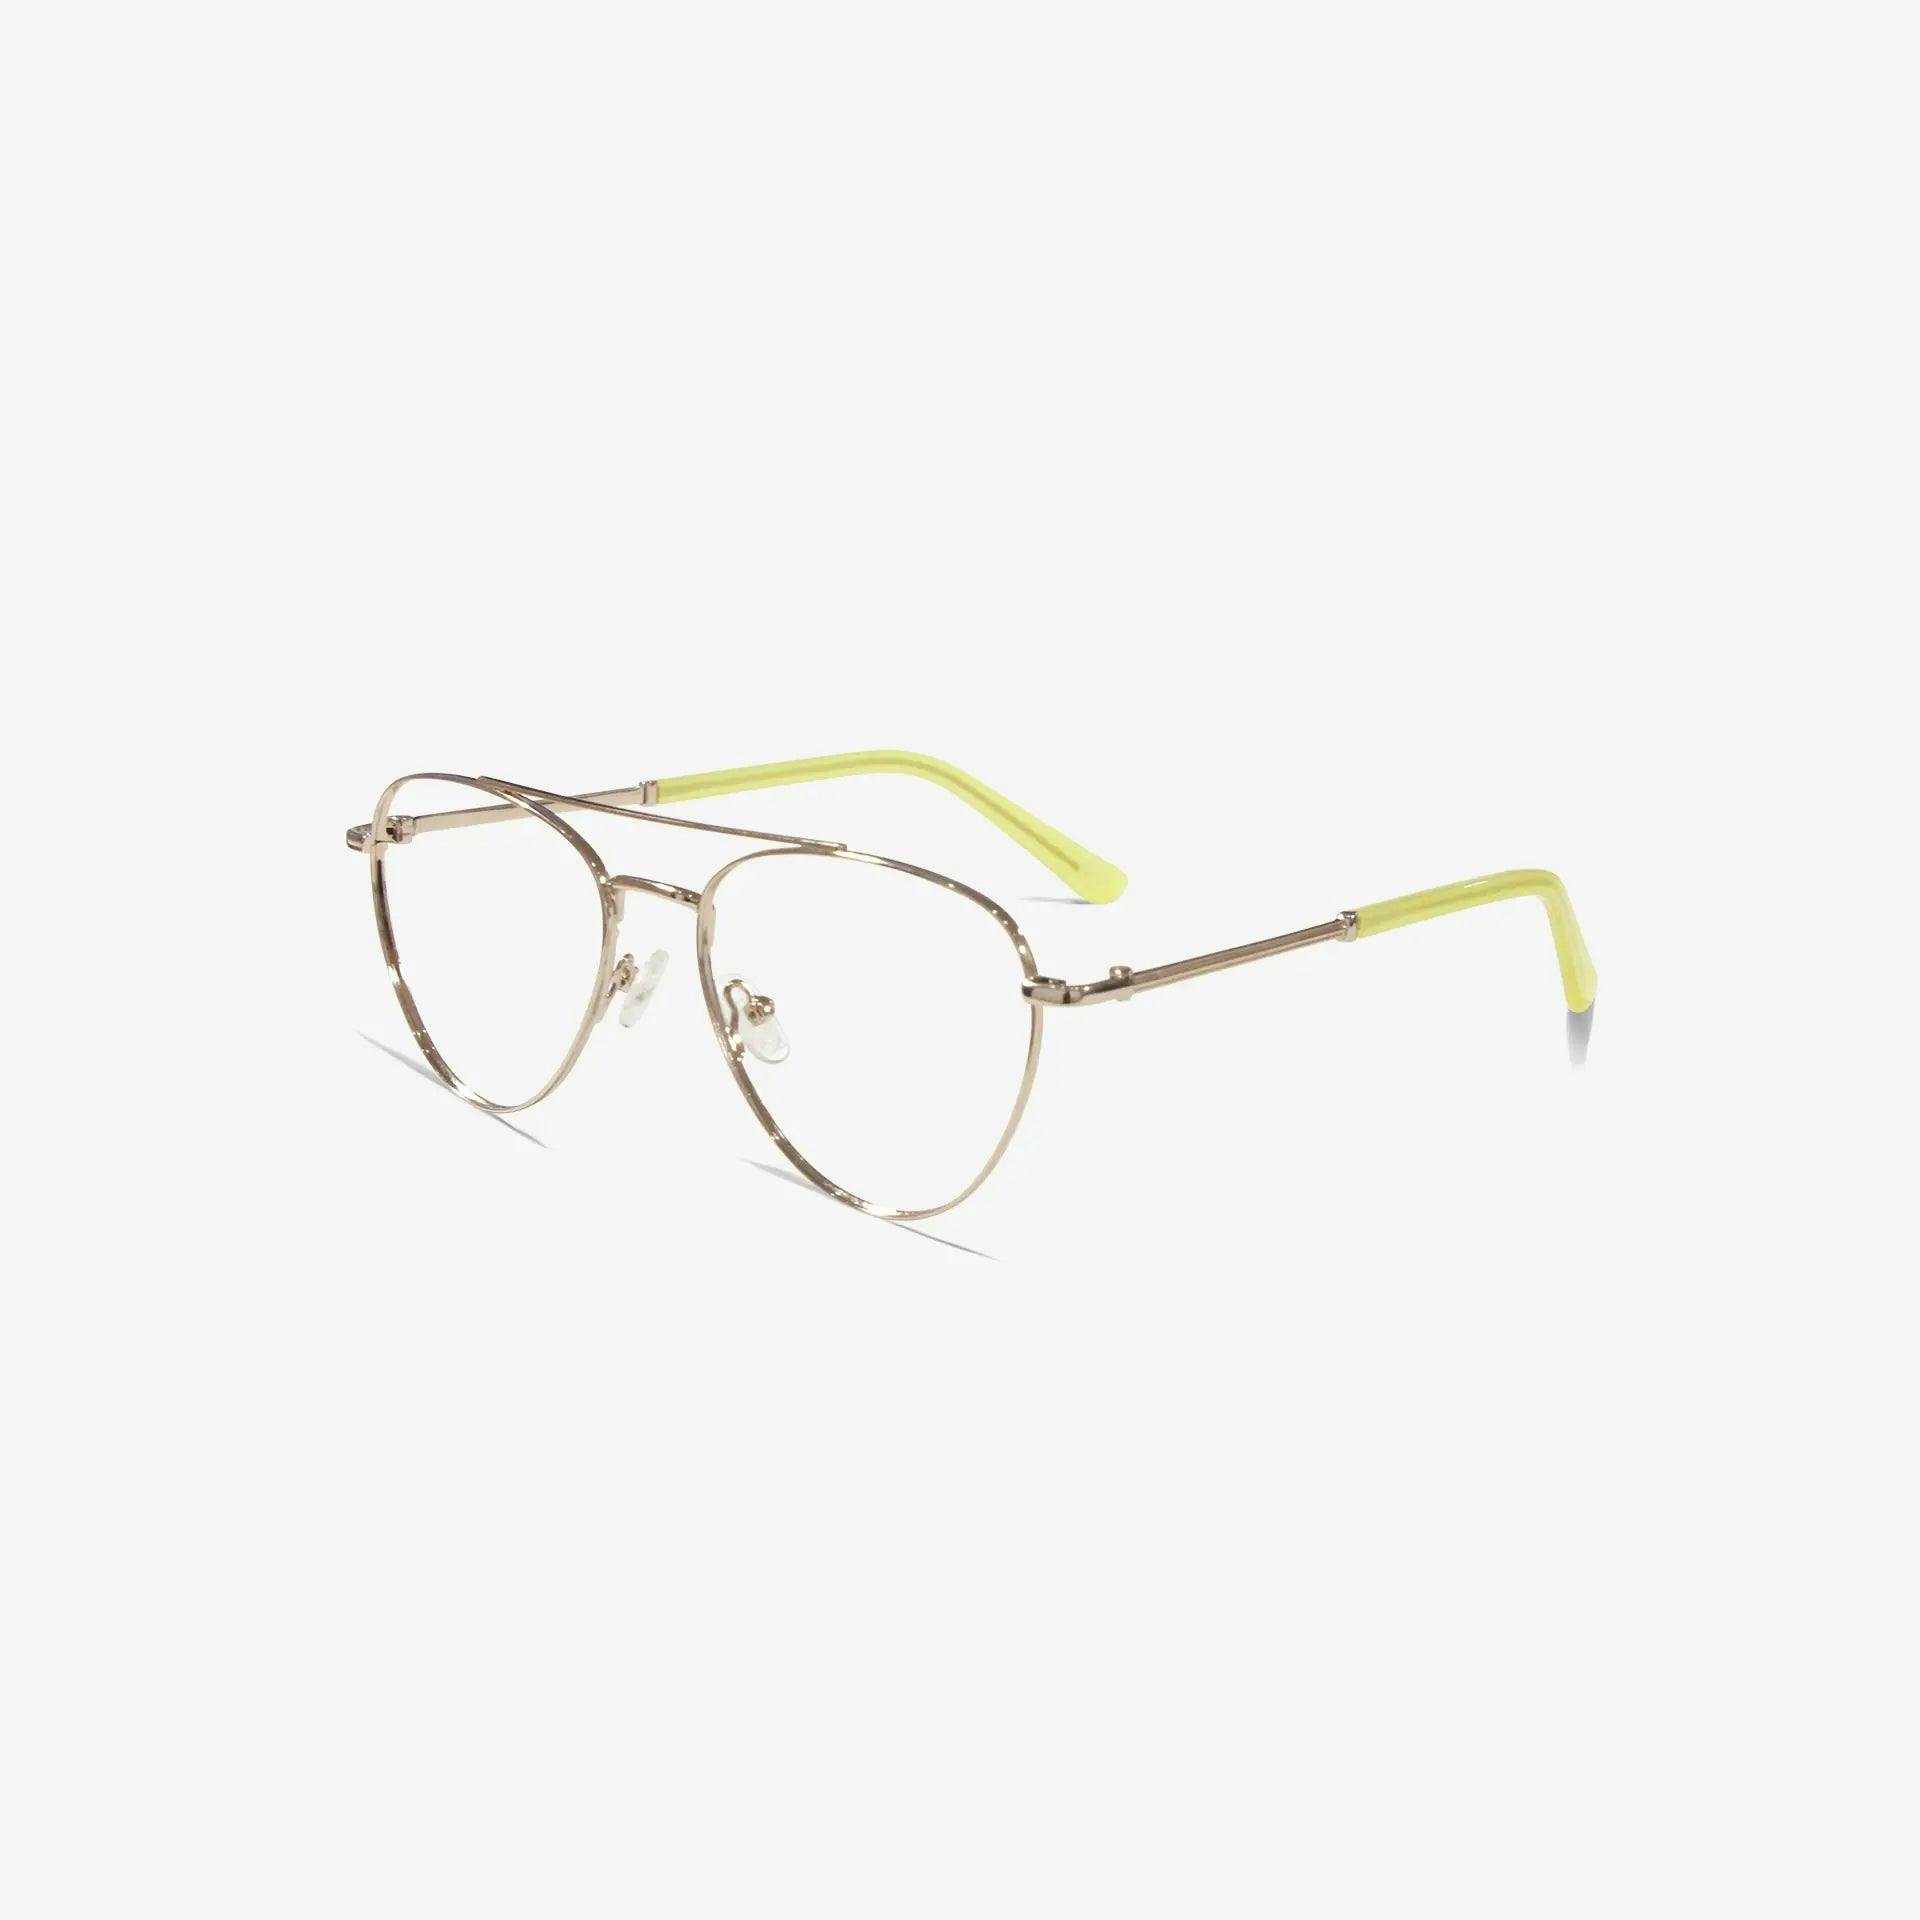 Huxley glasses | Prop Silver 